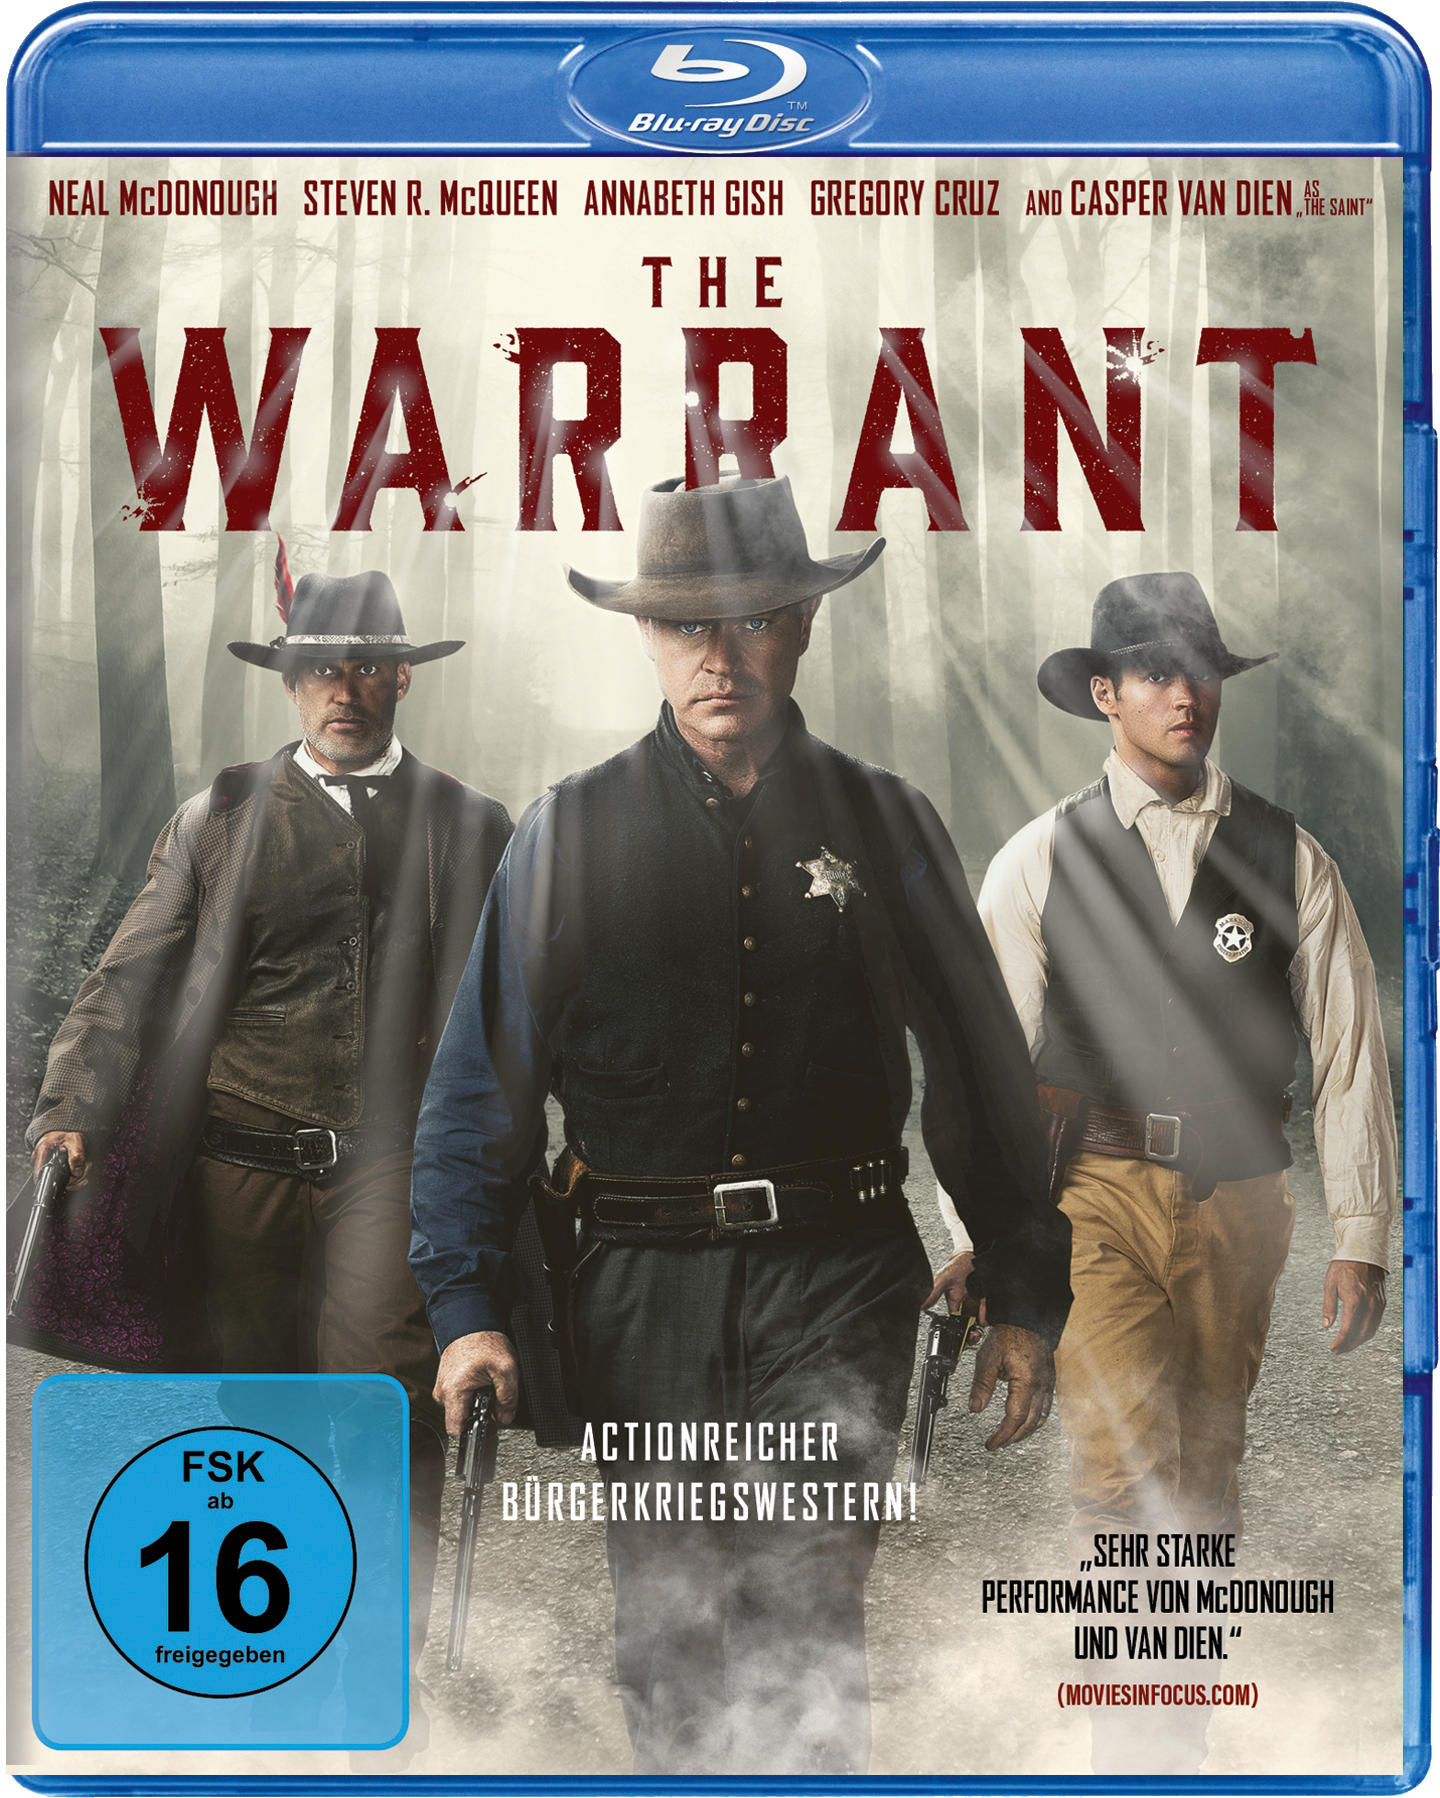 The Blu-ray Warrant